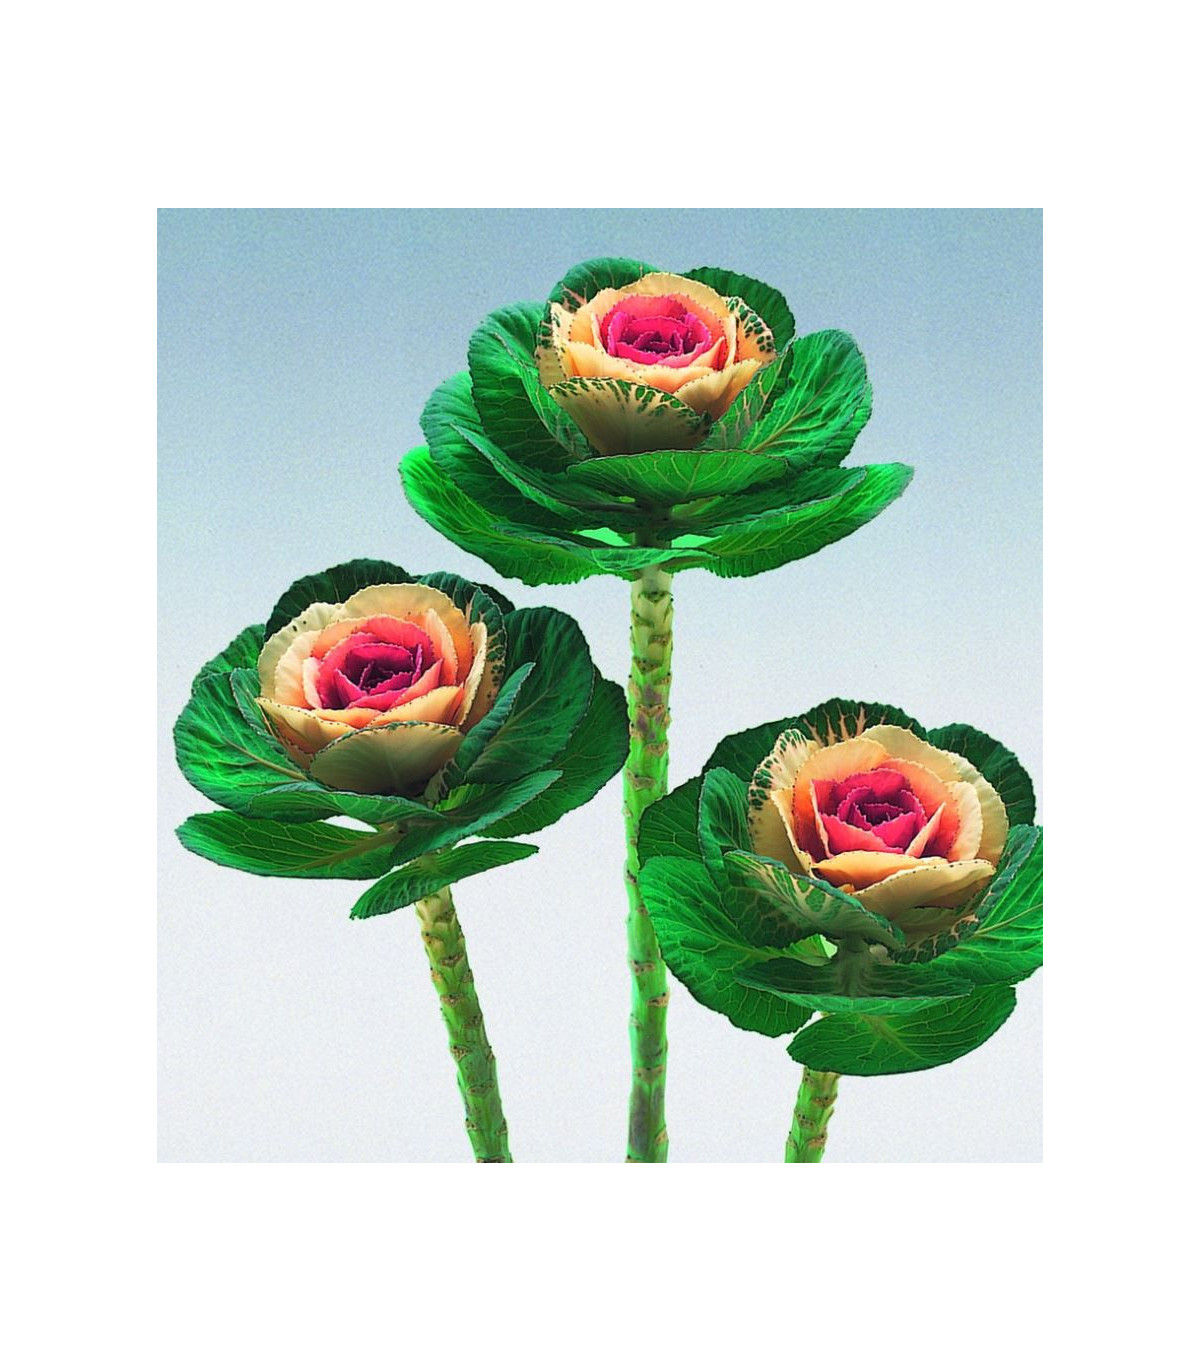 Okrasné zelí Crane bicolor F1 - Brassica oleracea - osivo okrasného zelí - 20 ks